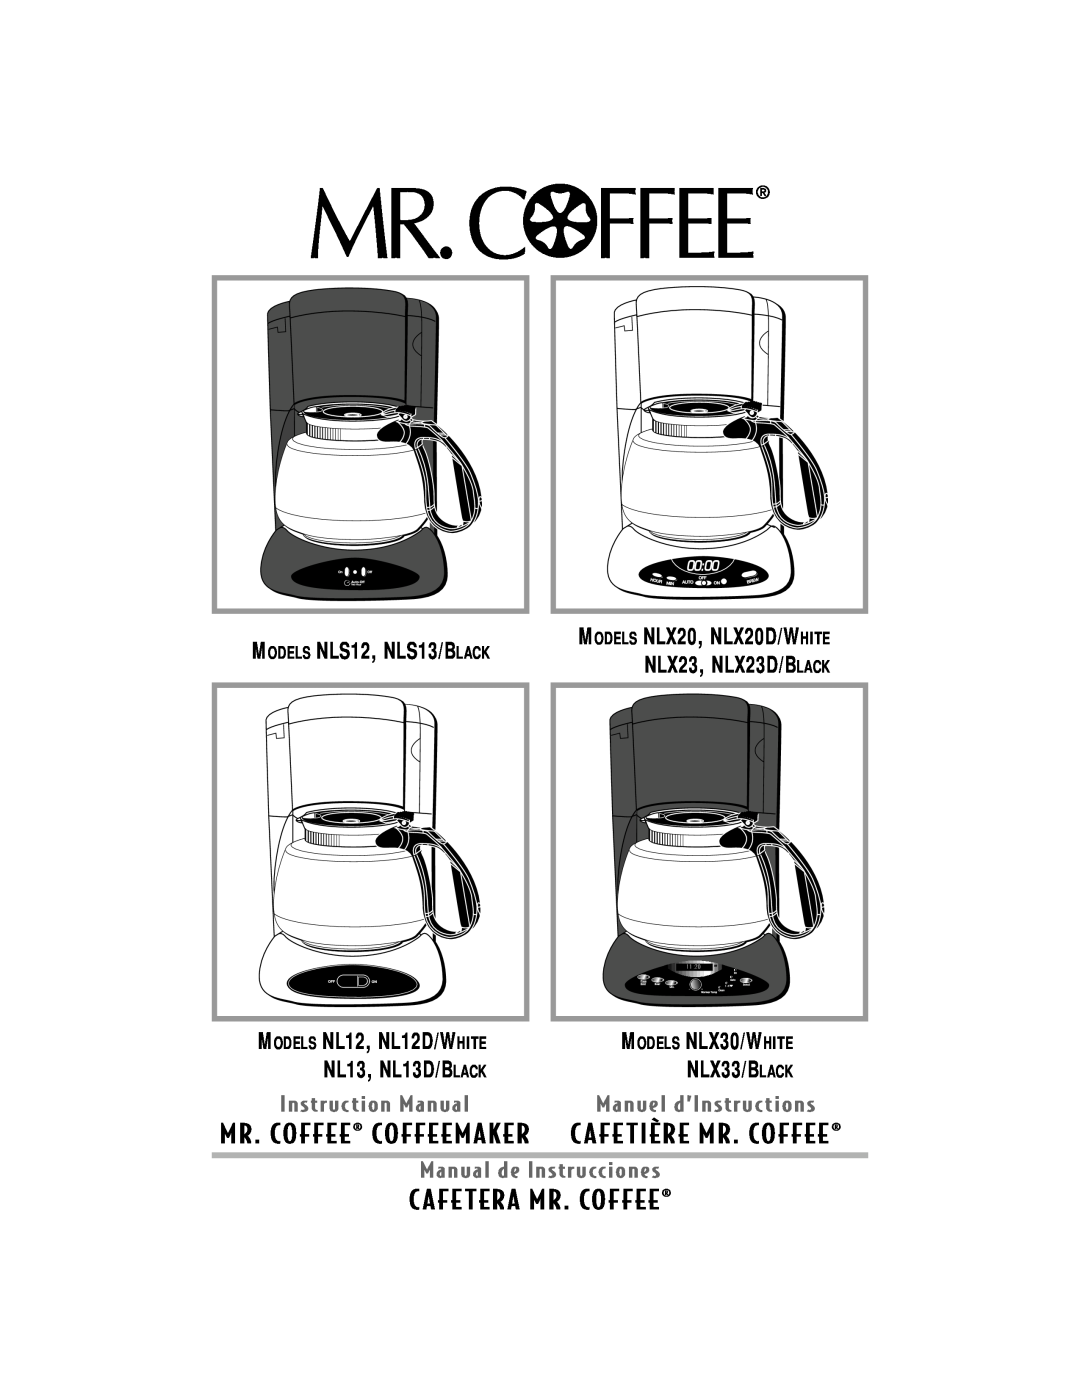 Mr. Coffee instruction manual MODELS NLS12, NLS13/BLACK, MODELS NLX20, NLX20D/WHITE, NLX33/BLACK, NL13, NL13D/BLACK 